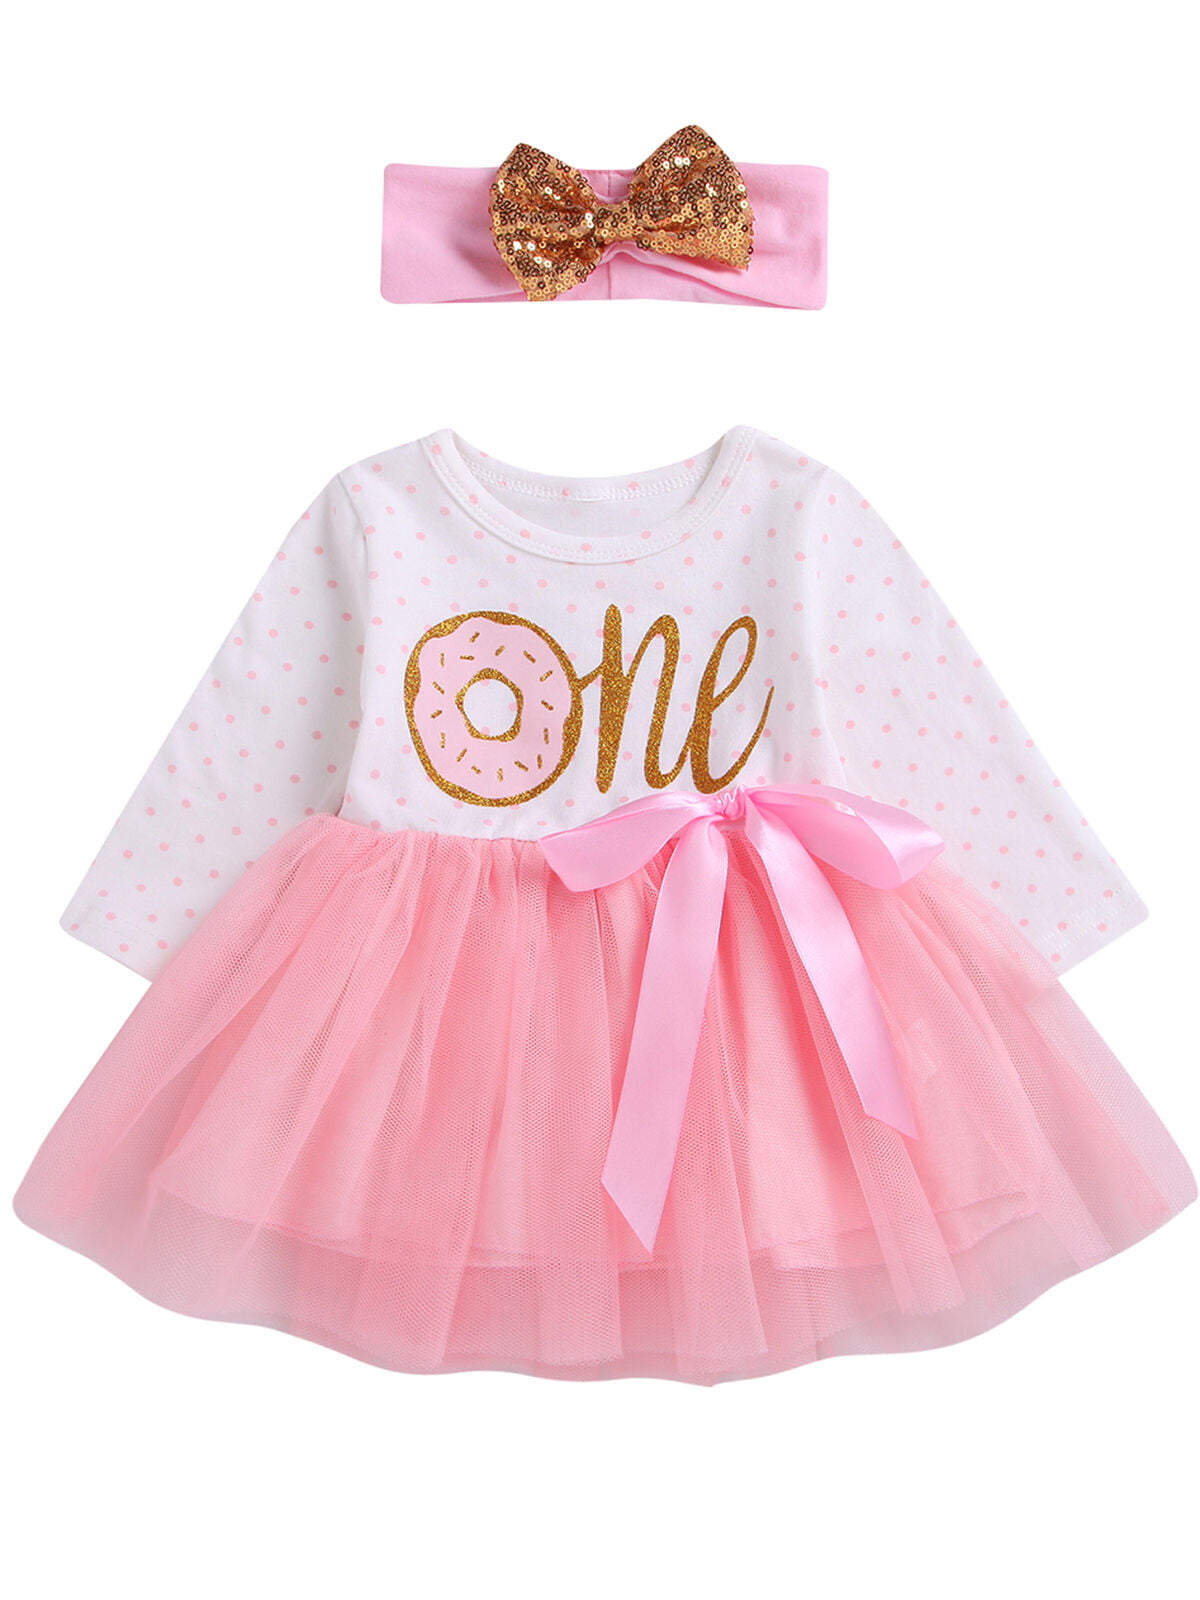 Infant Baby Girls Outfit Birthday Romper Tutu Skirt Headband Set Party Costume 